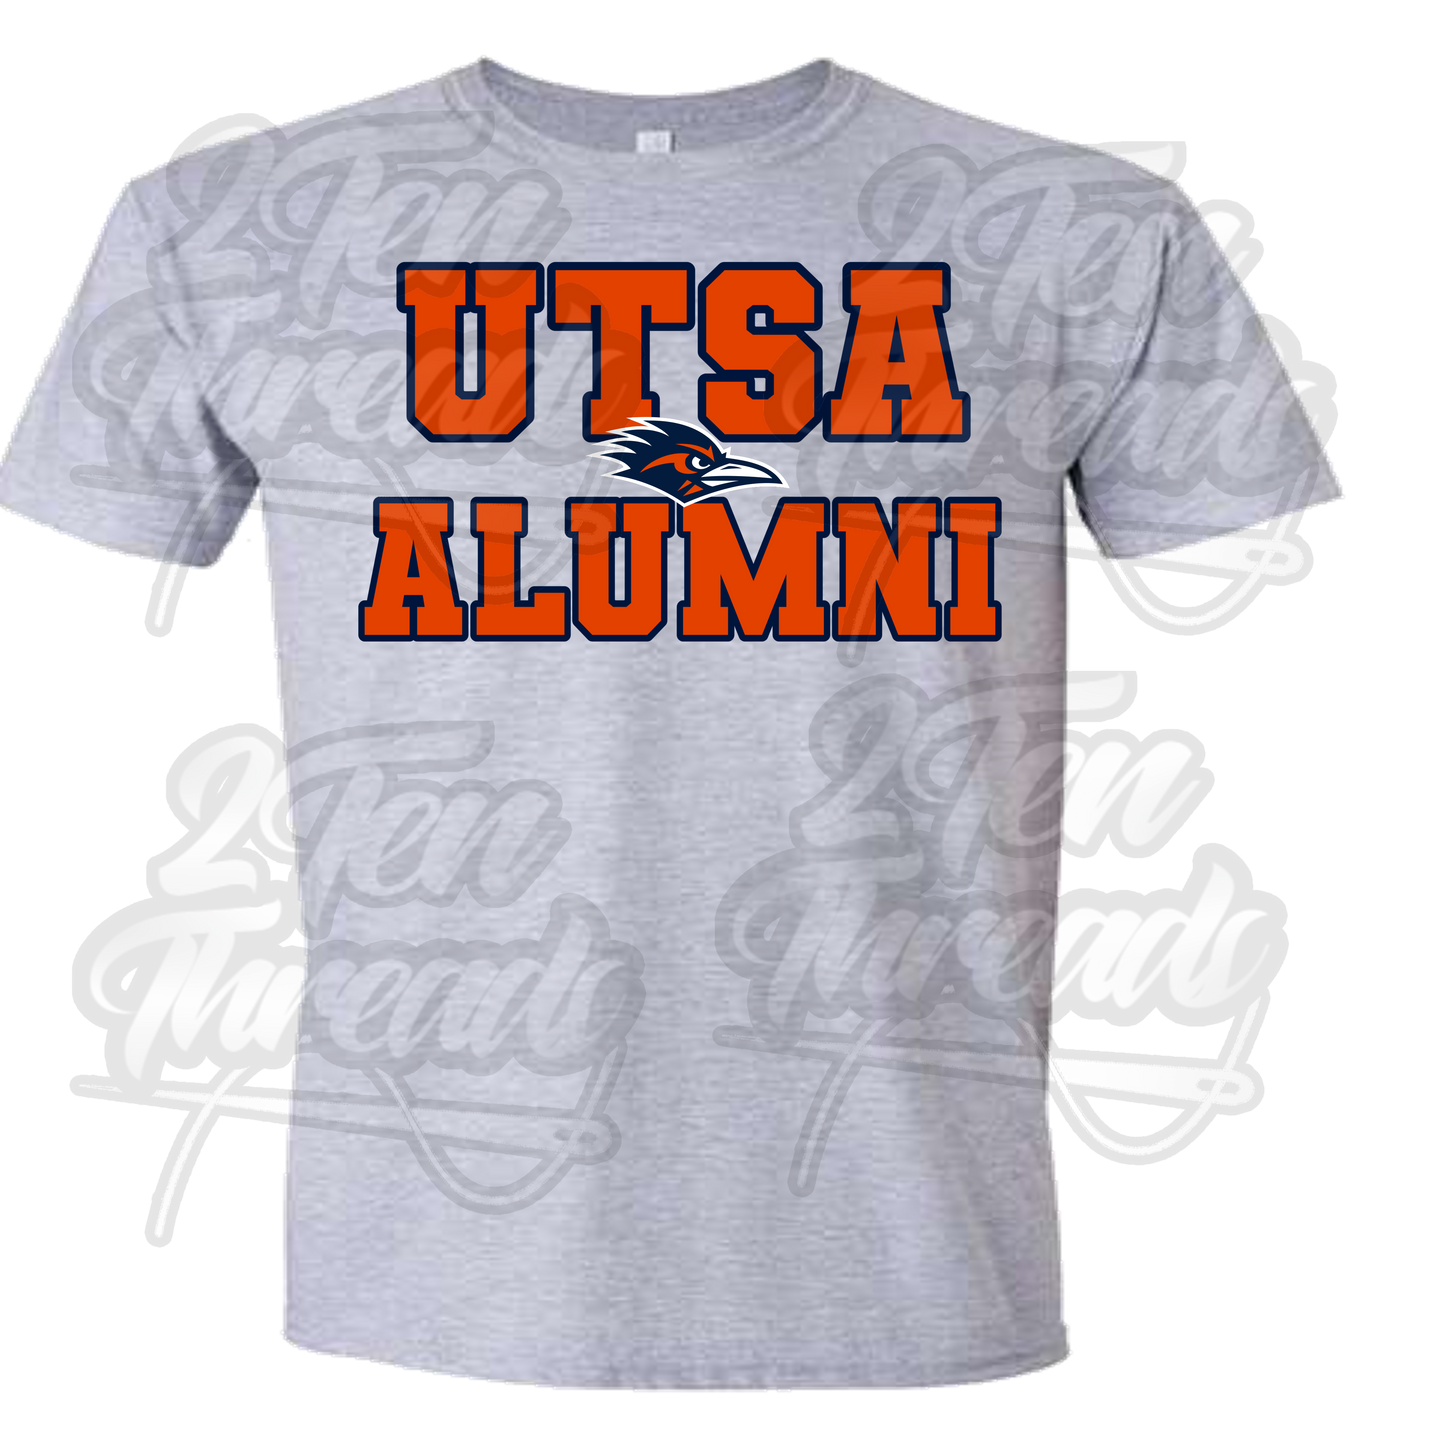 UTSA Alumni Shirt!